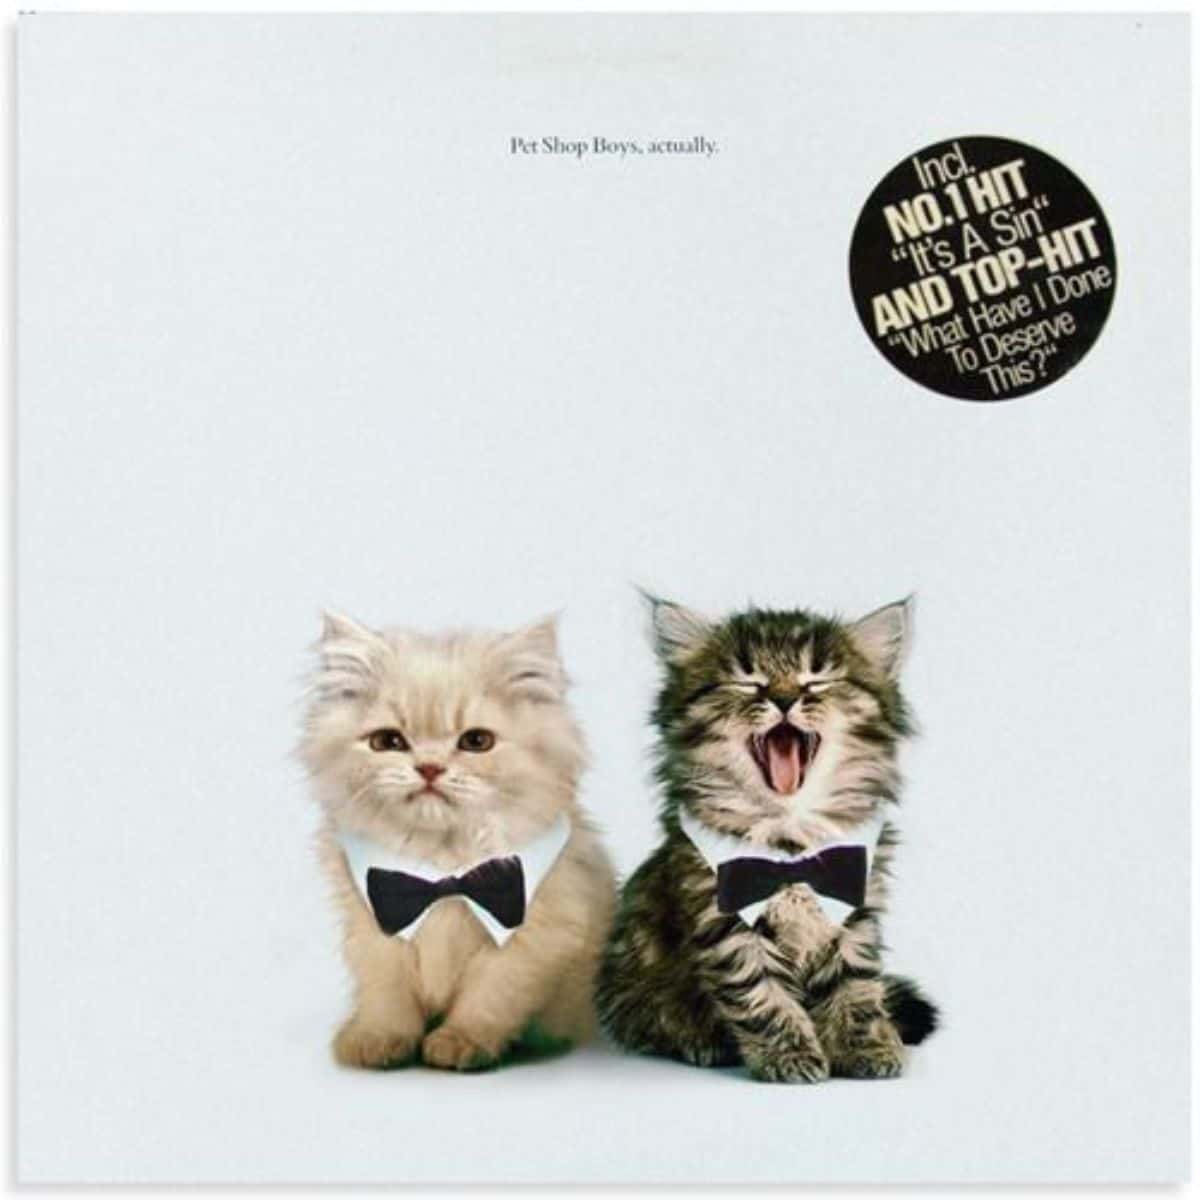 cat version of pet shop boys' album cover